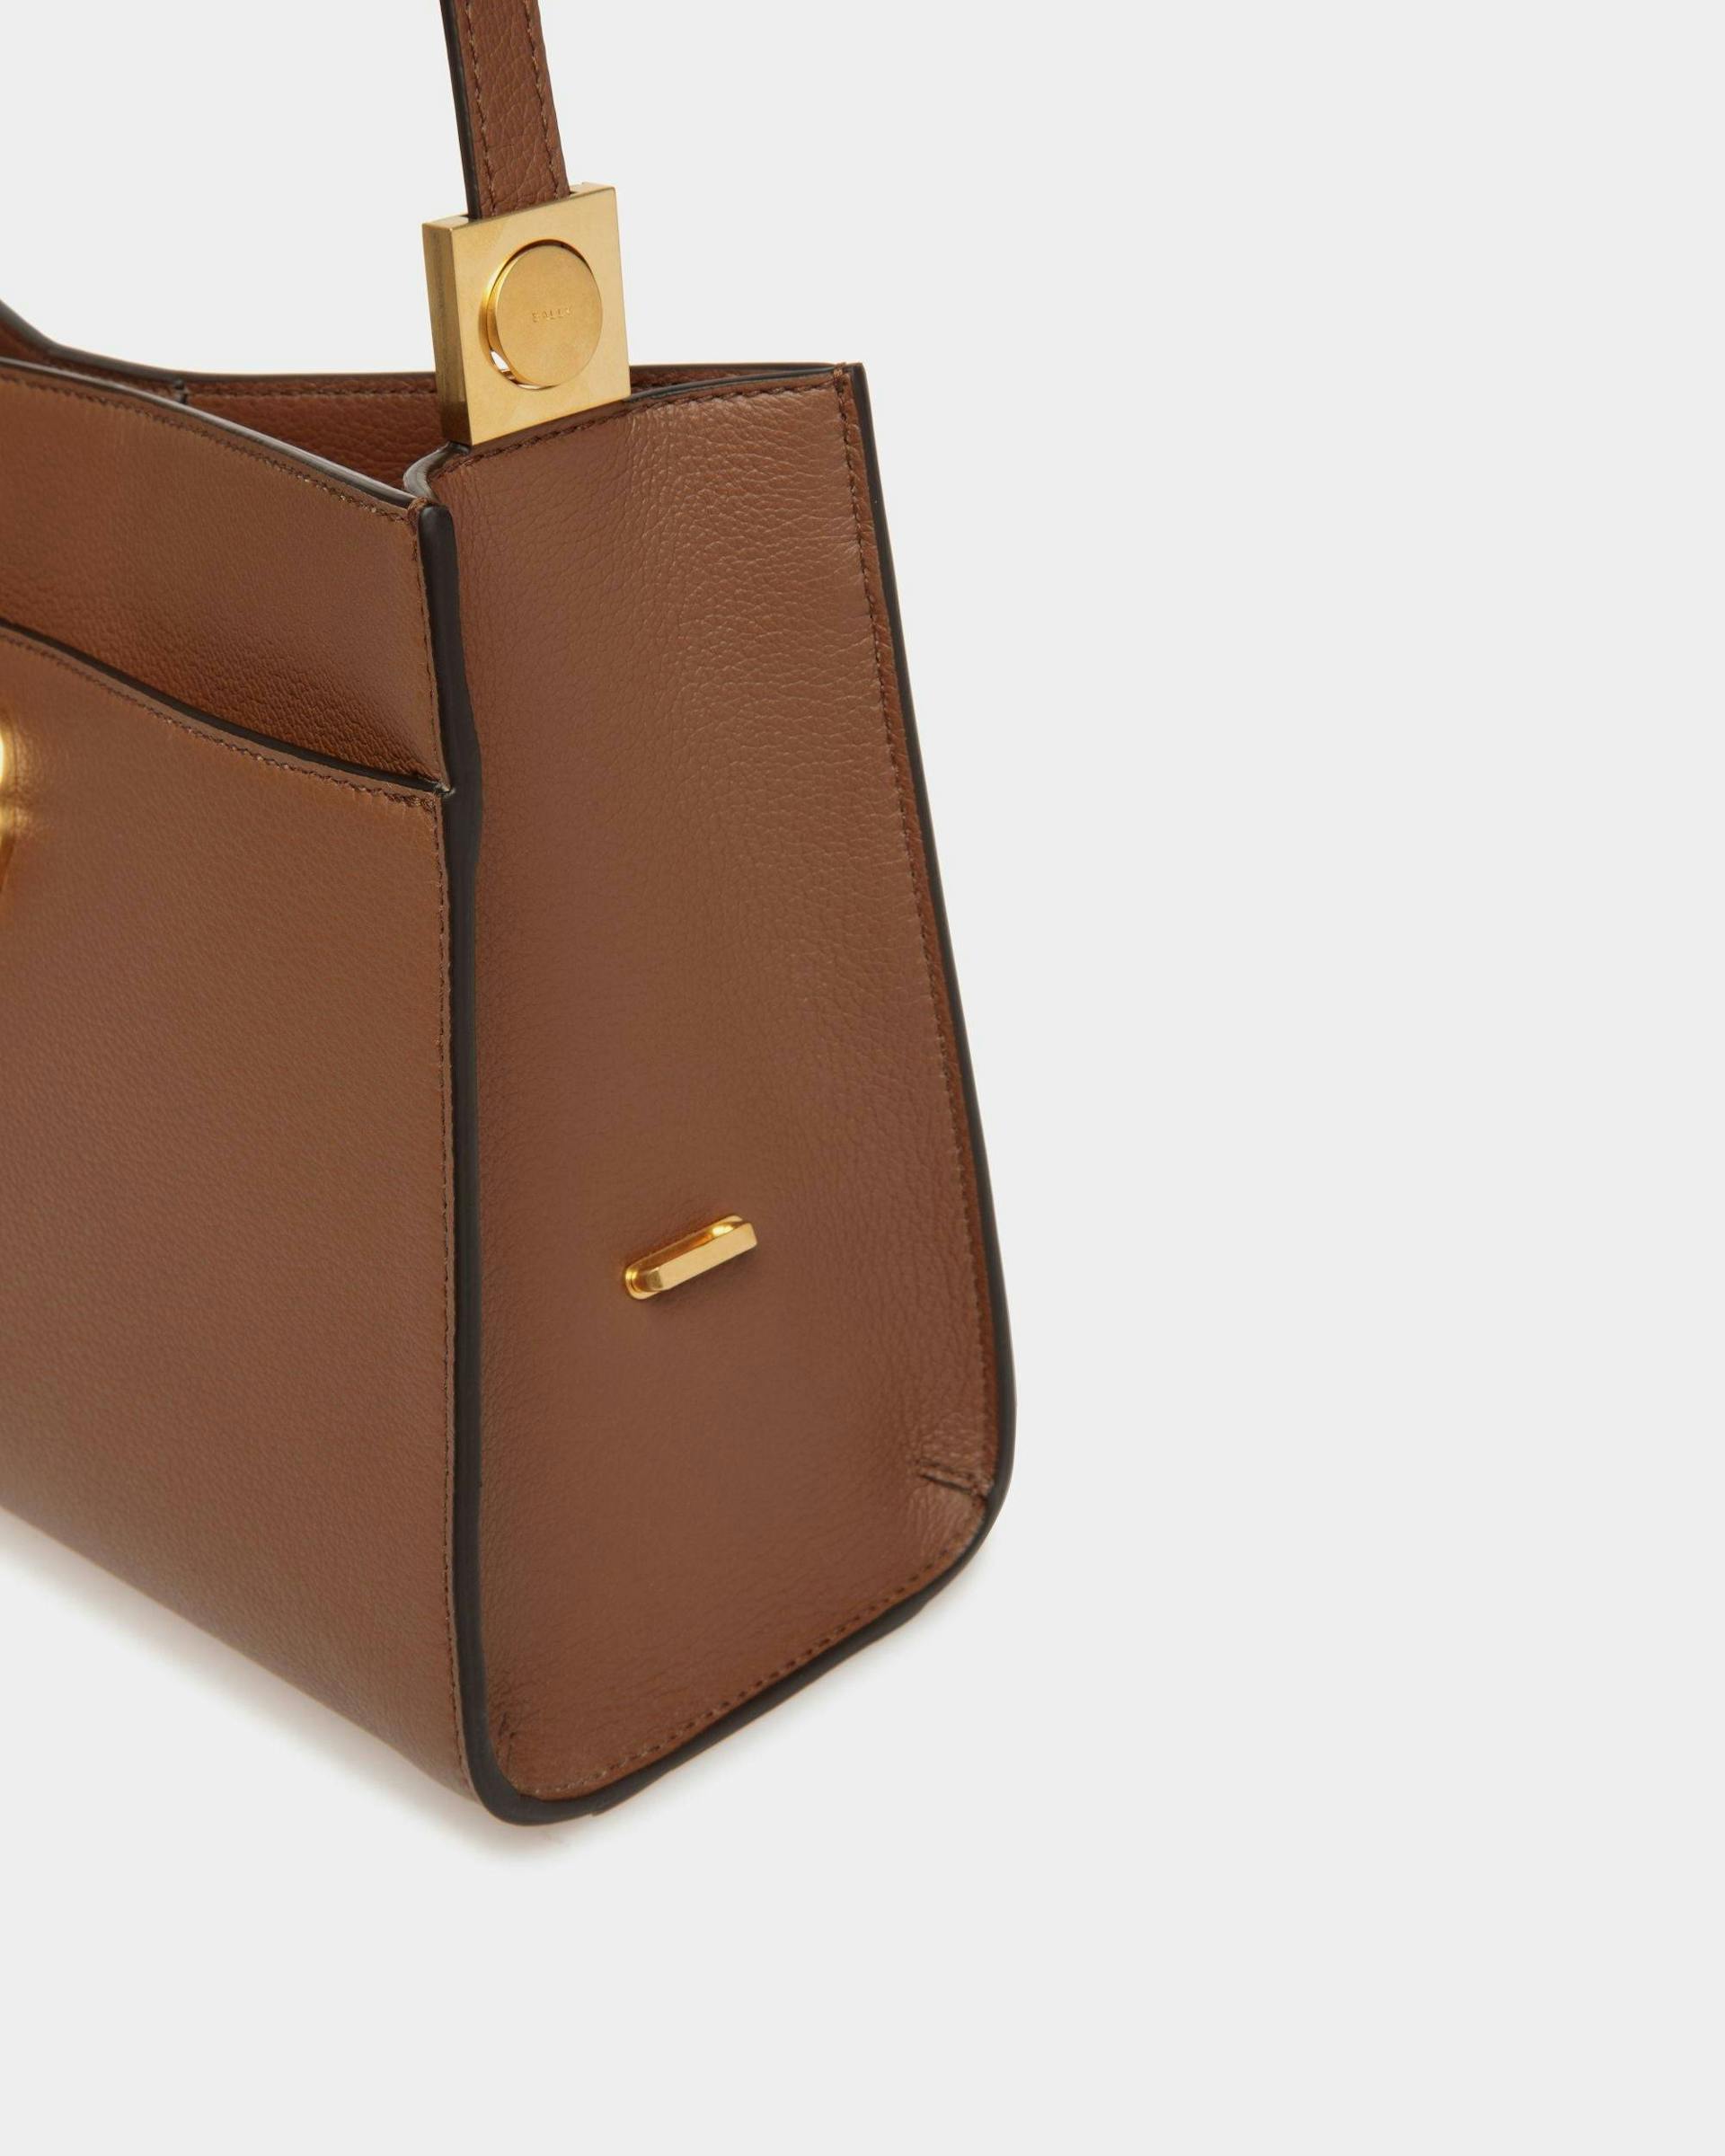 Women's Emblem Shoulder Bag in Brown Grained Leather | Bally | Still Life Detail